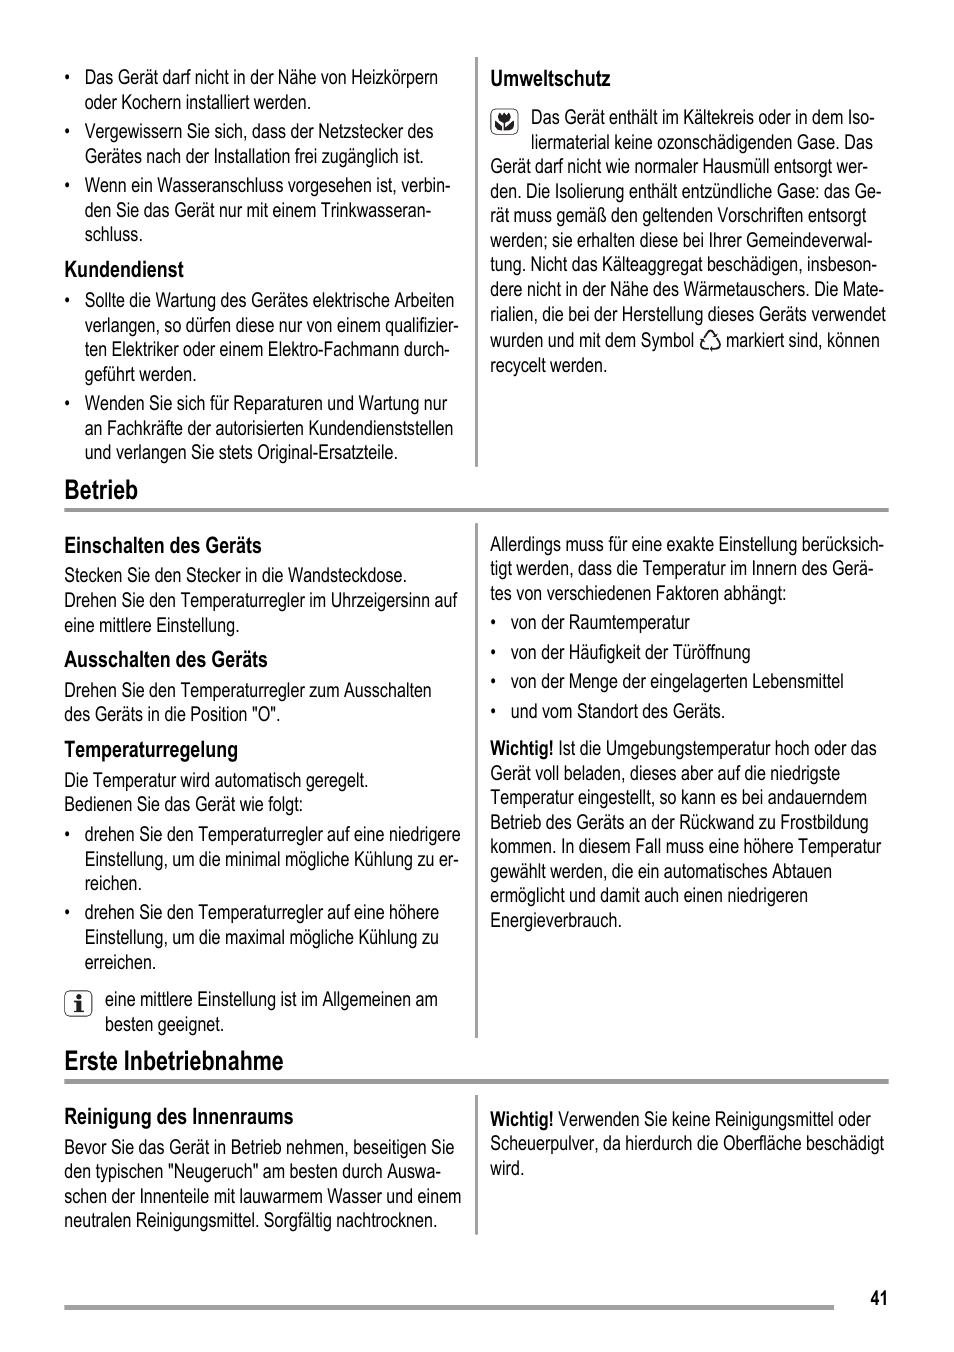 Betrieb, Erste inbetriebnahme | ZANKER KBT 23001 SB User Manual | Page 41 / 52